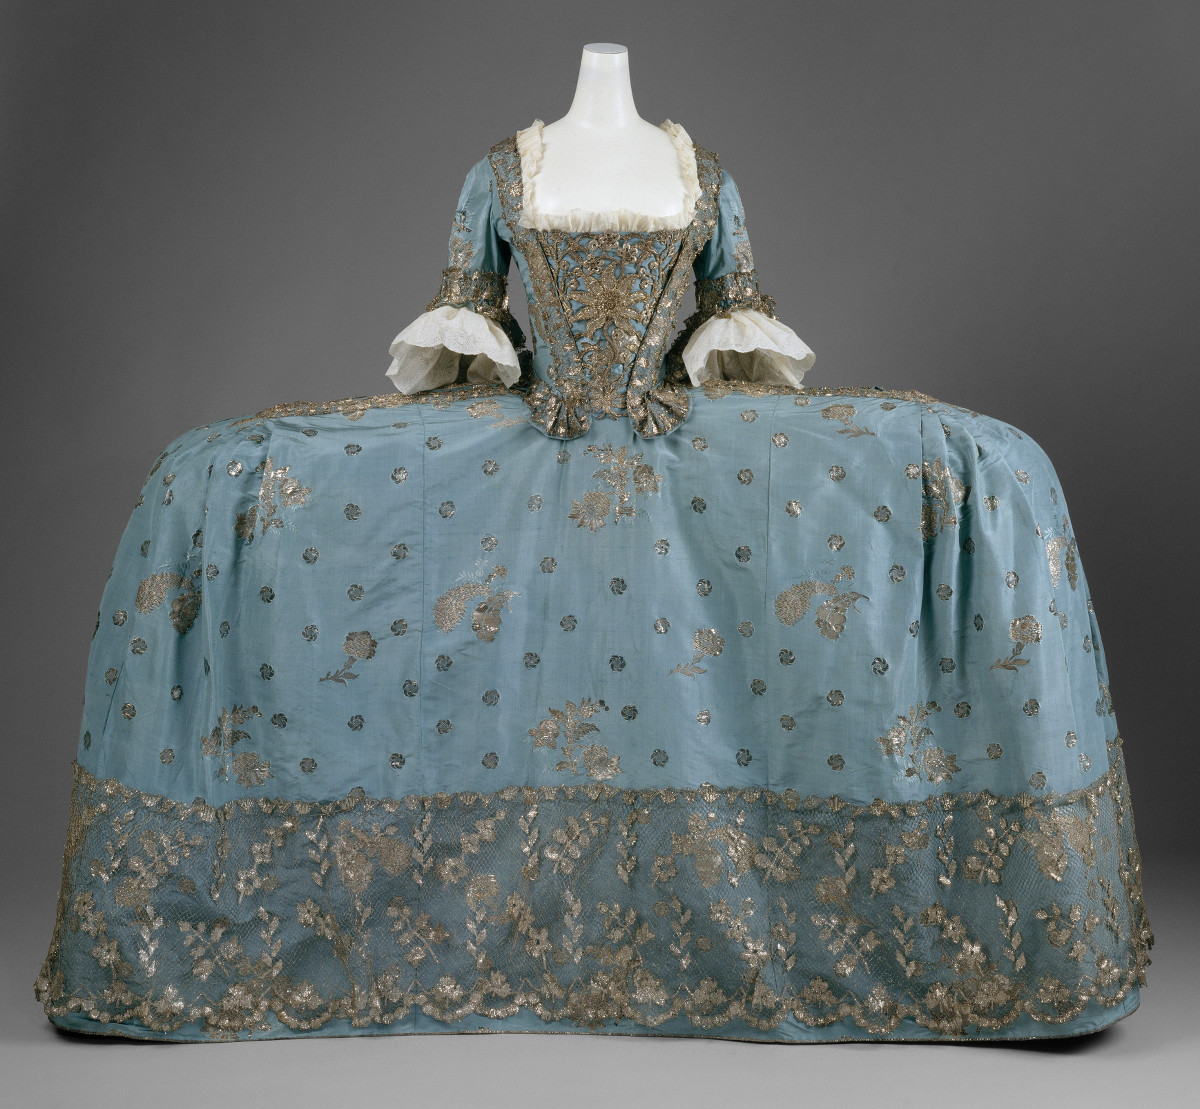 c. 1750. Court dress. British. Silk, metallic thread. metmuseum